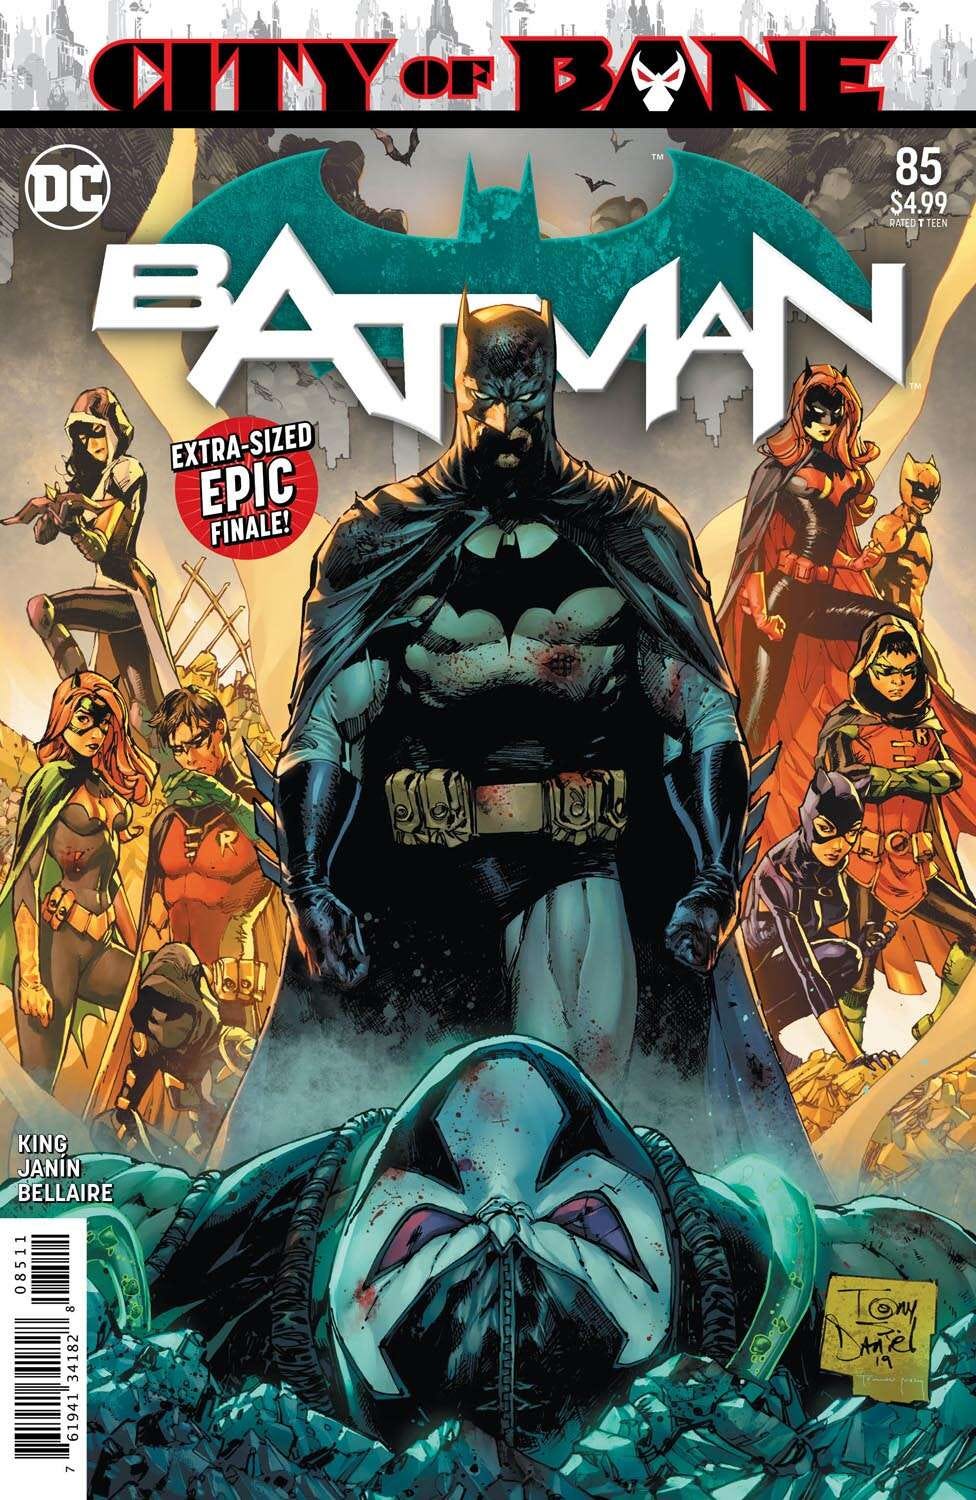 Tom King breaks down his Batman comic finale | EW.com